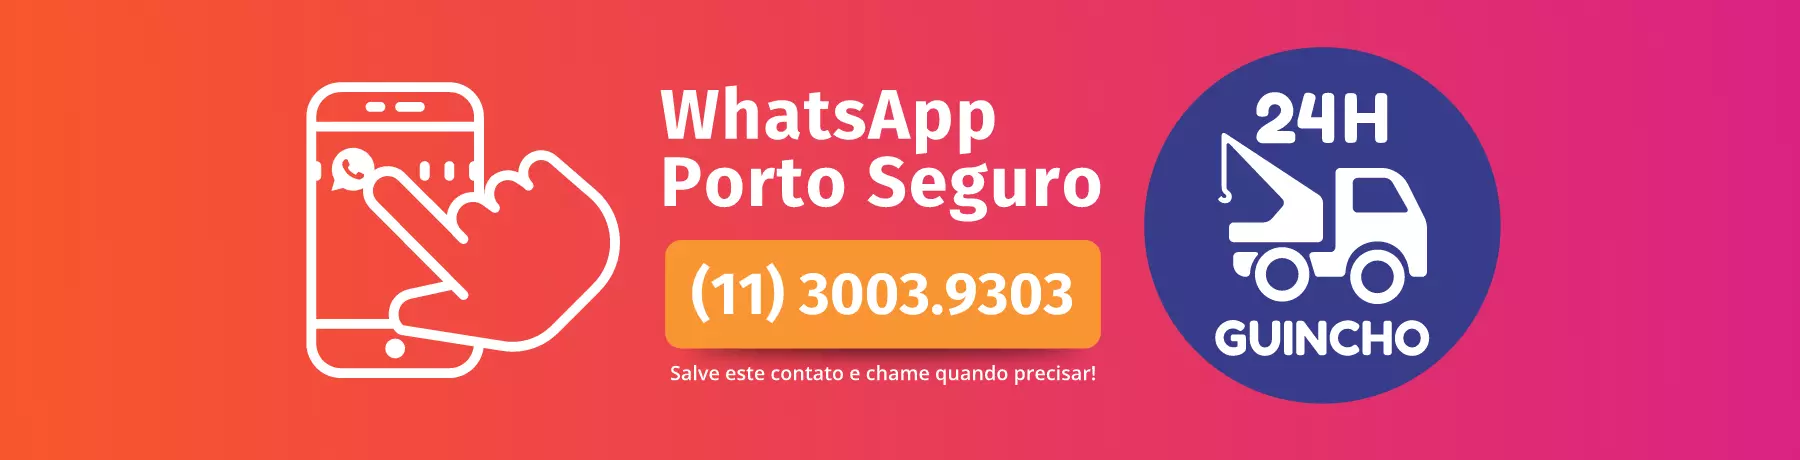 WhatsApp da Porto Seguro (11) 3003.9303